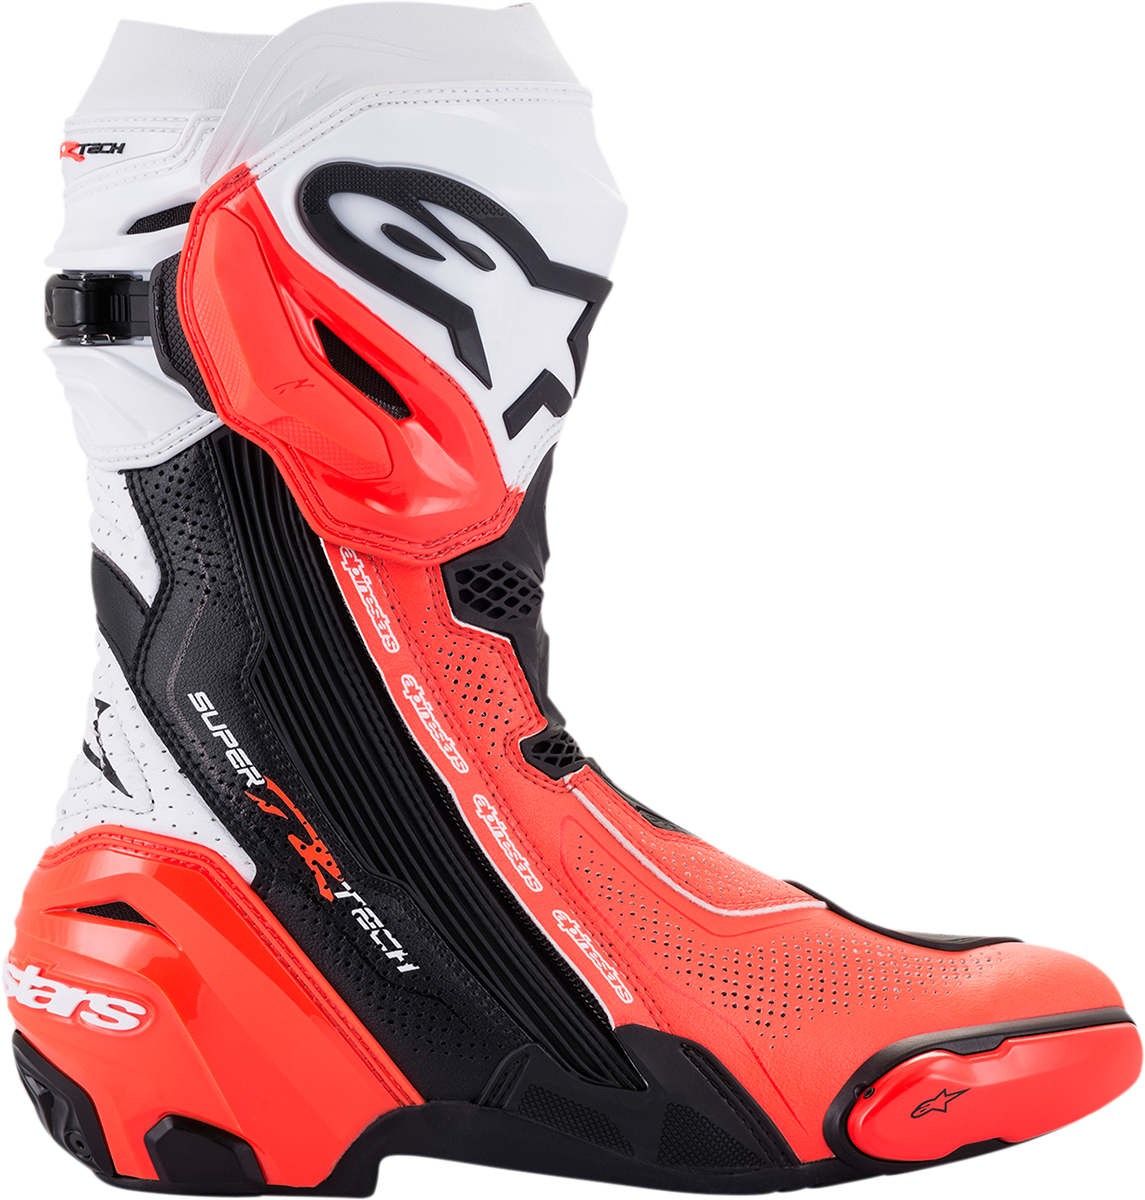 ALPINESTARS Supertech V Boots - Black/Fluo Red/White - US 12.5 / EU 48 2220121-124-48